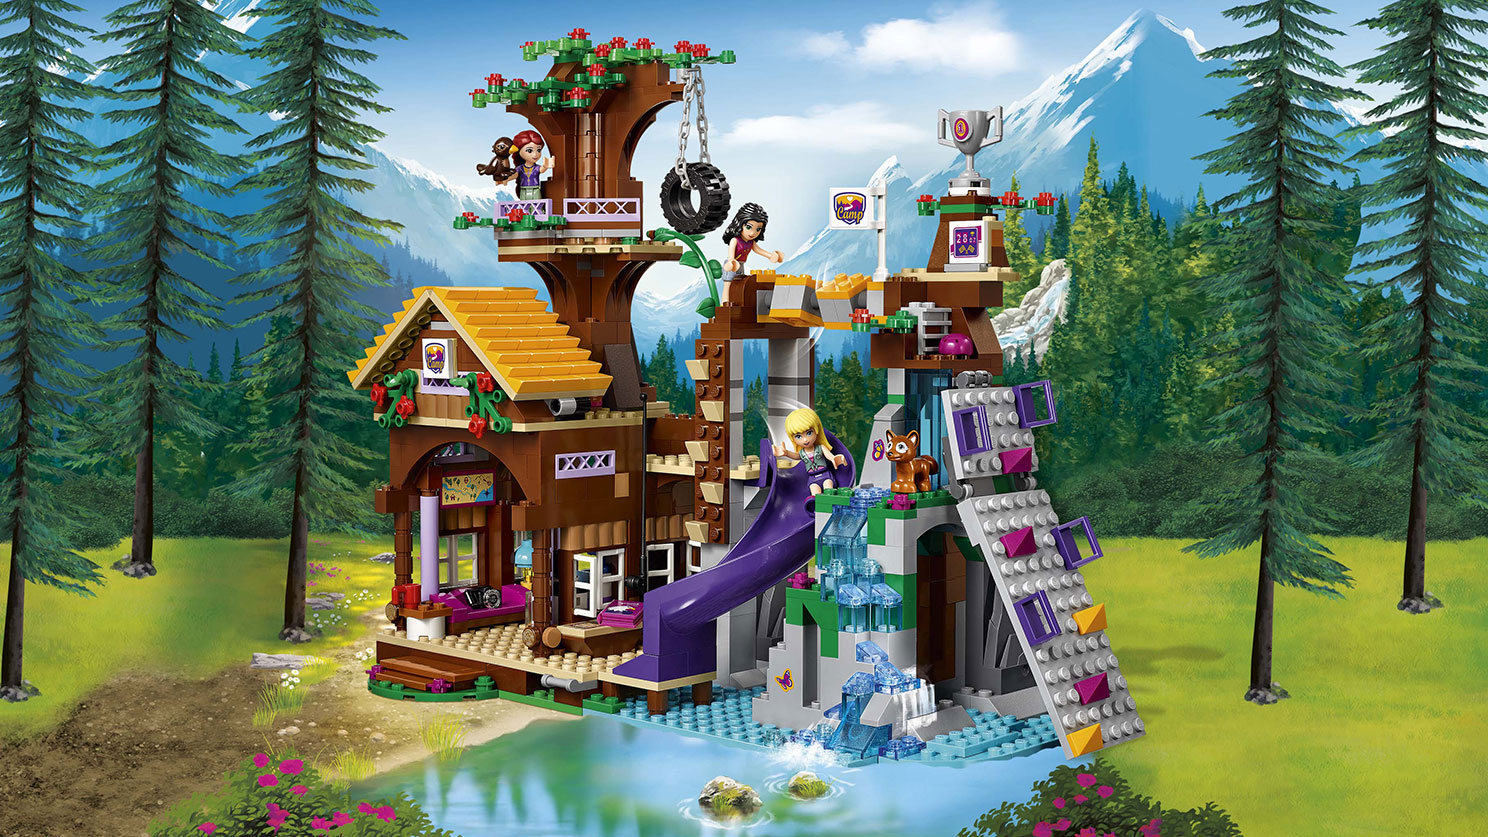 2020 Compatible Friends 41122  Adventure Camp Tree House Toy Children 